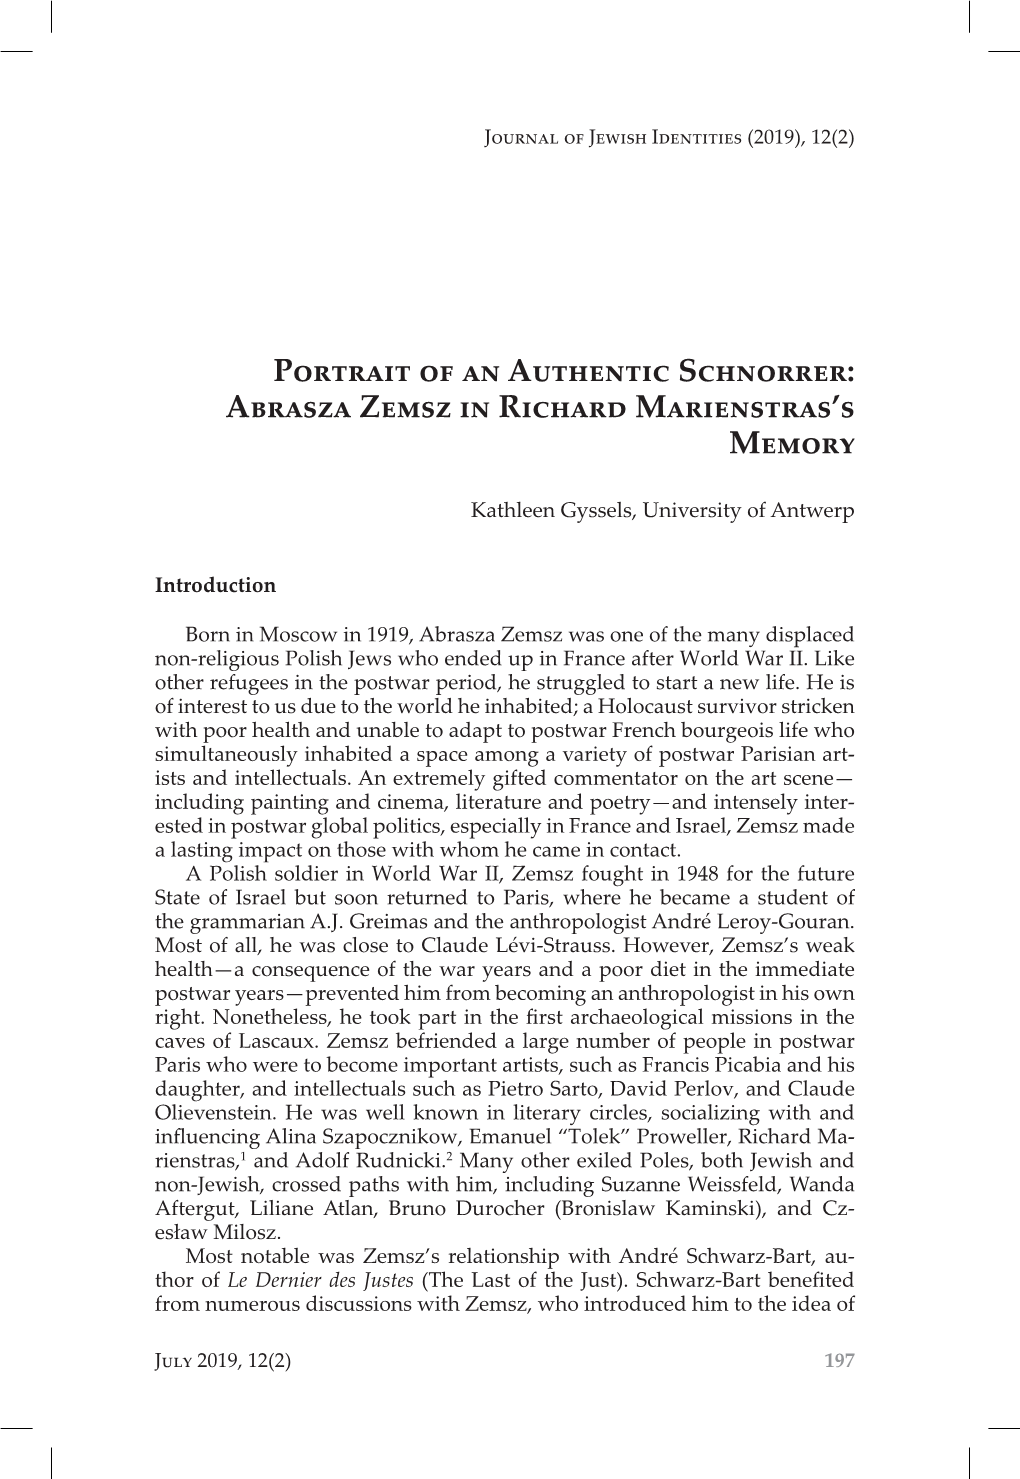 Portrait of an Authentic Schnorrer: Abrasza Zemsz in Richard Marienstras’S Memory